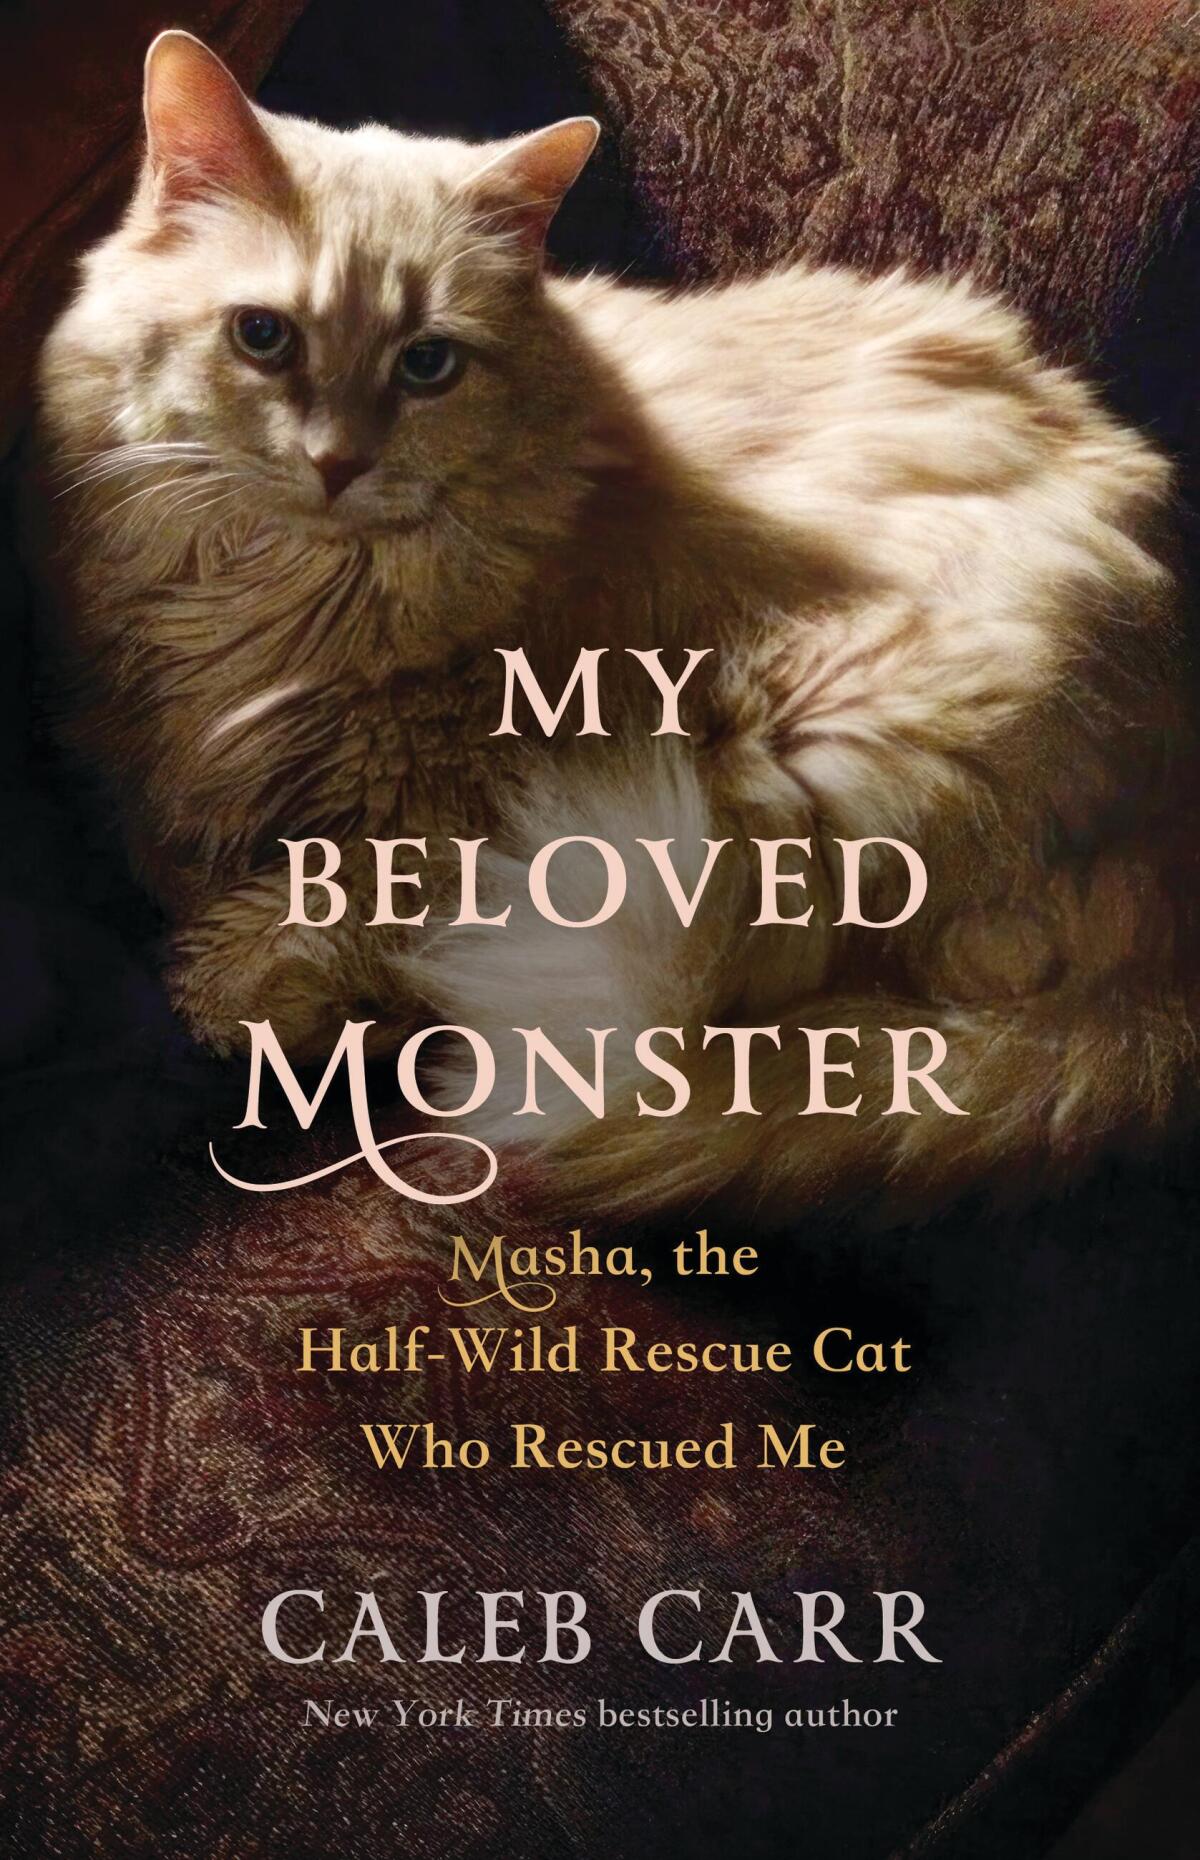 "My Beloved Monster" by Caleb Carr